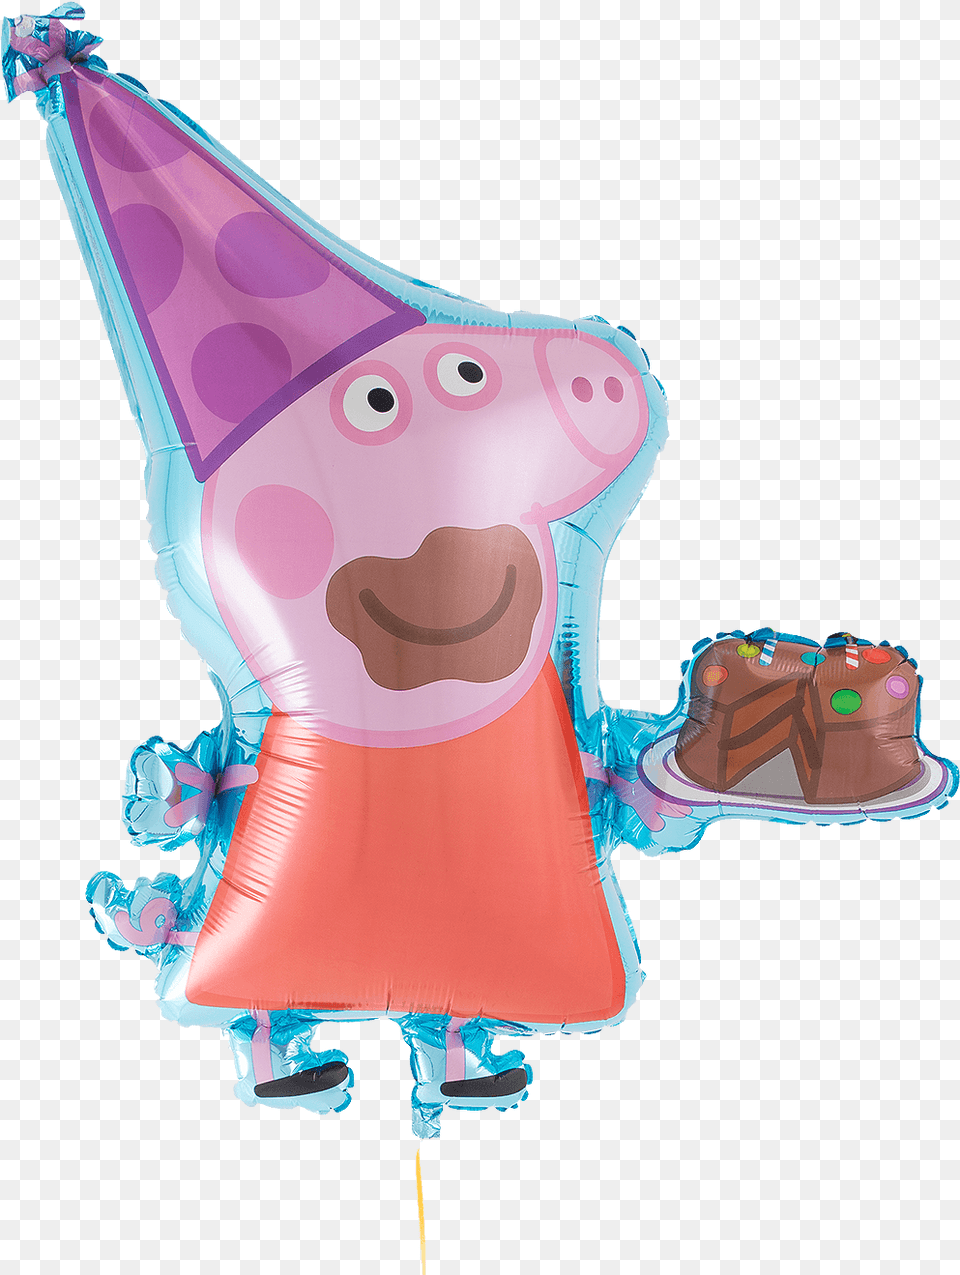 Peppa Pig Birthday Cake Supershape Cartoon, Clothing, Hat, Pinata, Toy Png Image